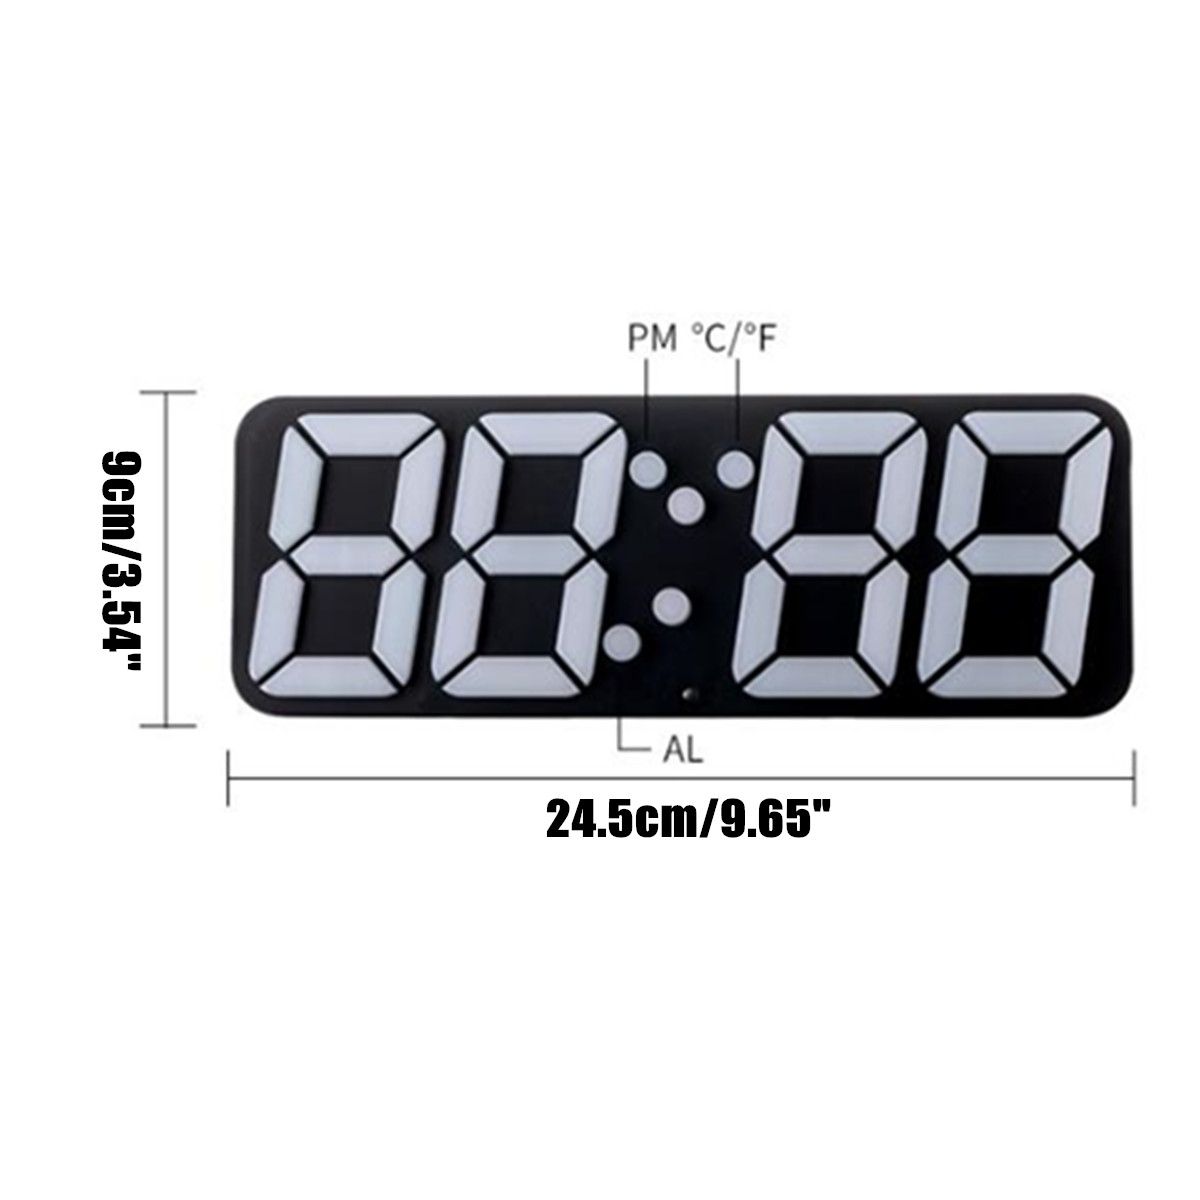 3D-LED-Digital-Clock-115-RGB-Colors-Desk-Wall-Alarm-Clock-Remote-Control-Date-Alarm-Clock-Thermomete-1598044